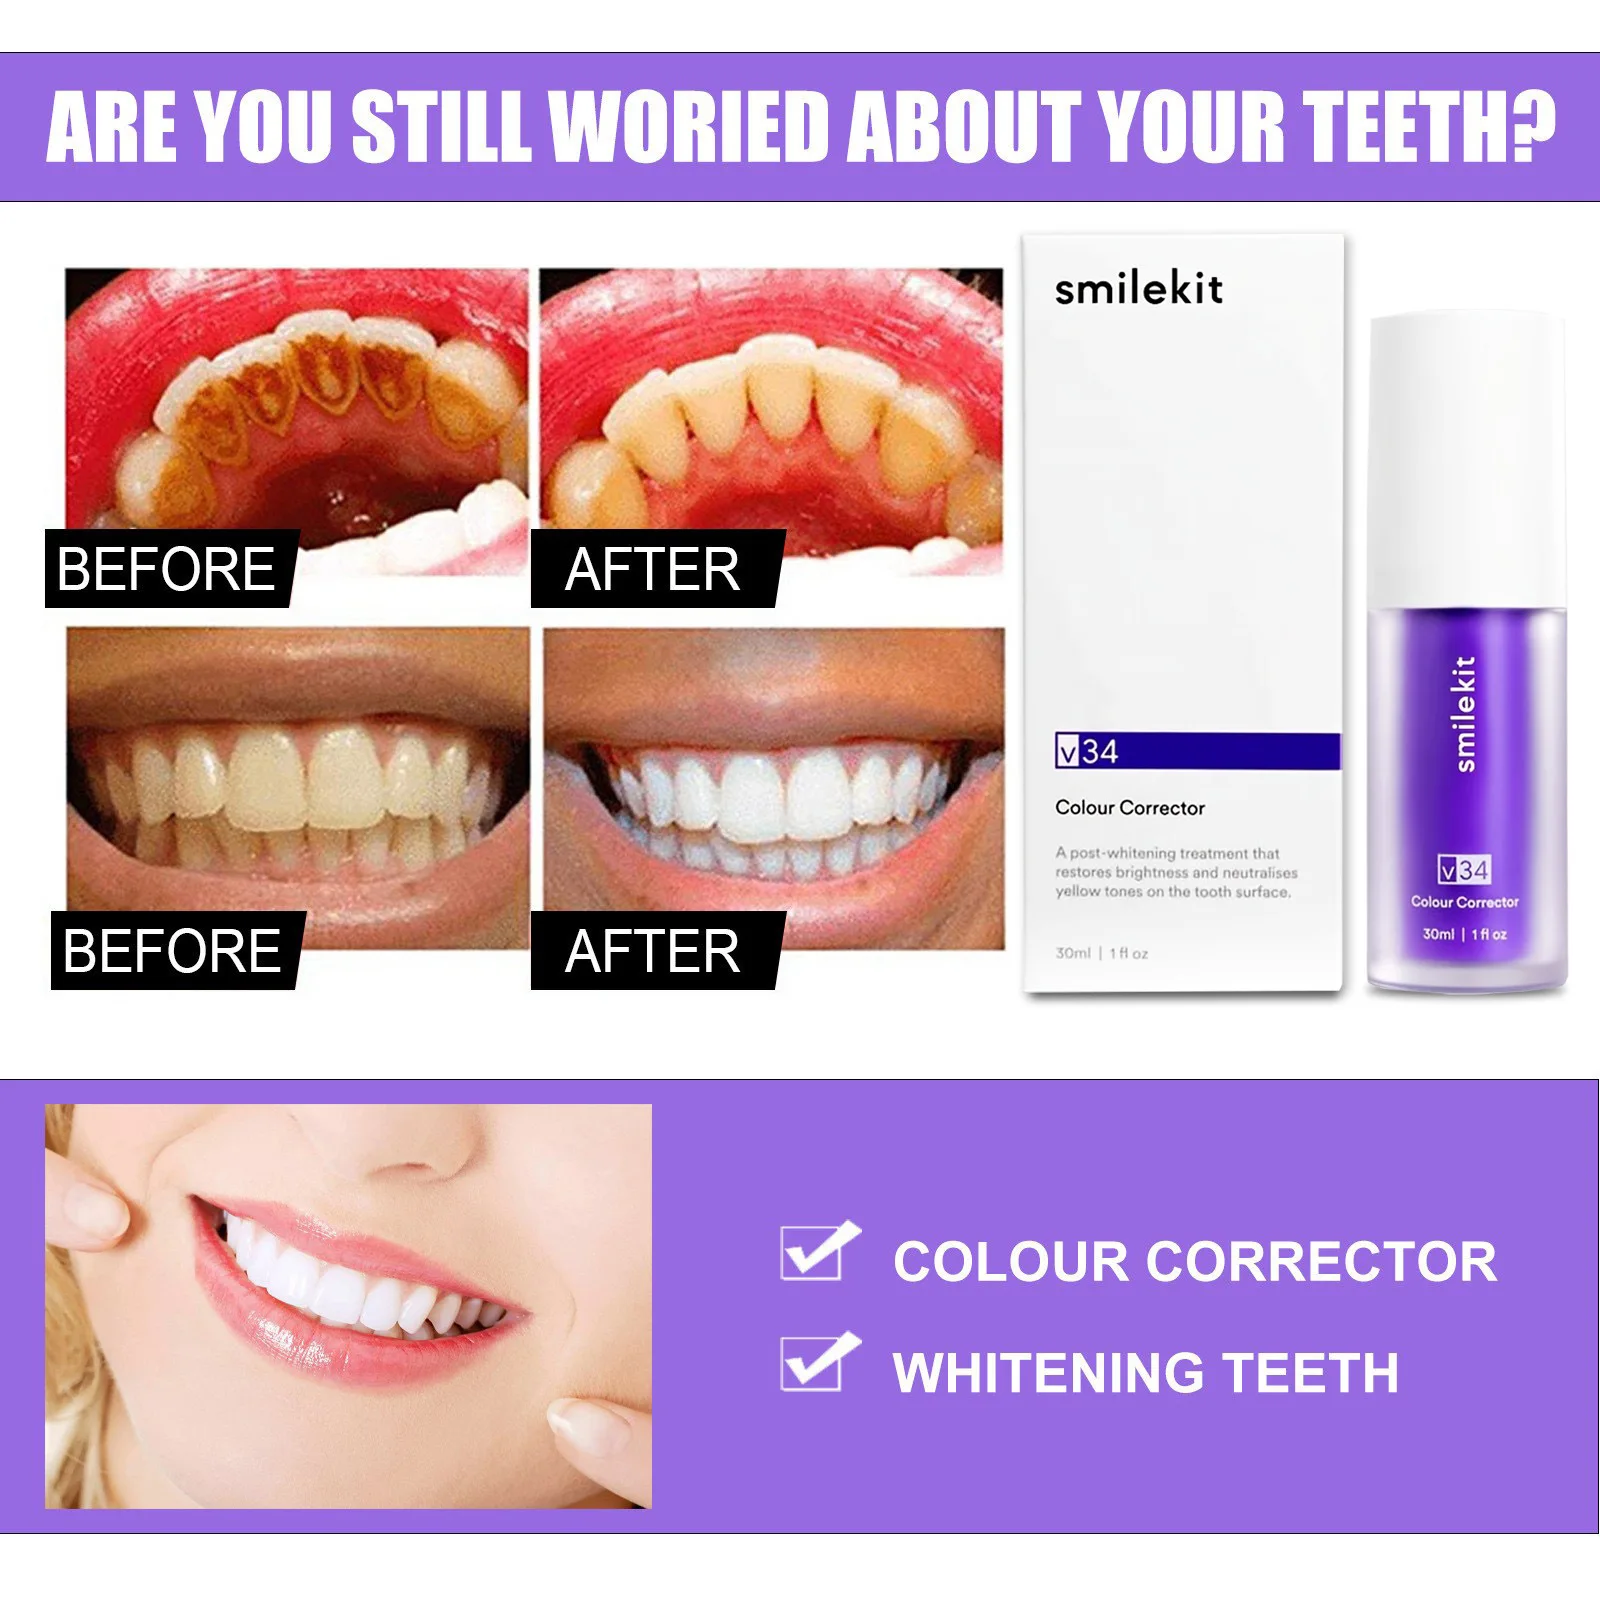 v34 תיקון צבע סגול שיניים הלבנת שיניים הסרת כתמים הלבנת שיניים שועל סגול משחת שיניים תיקון צבע